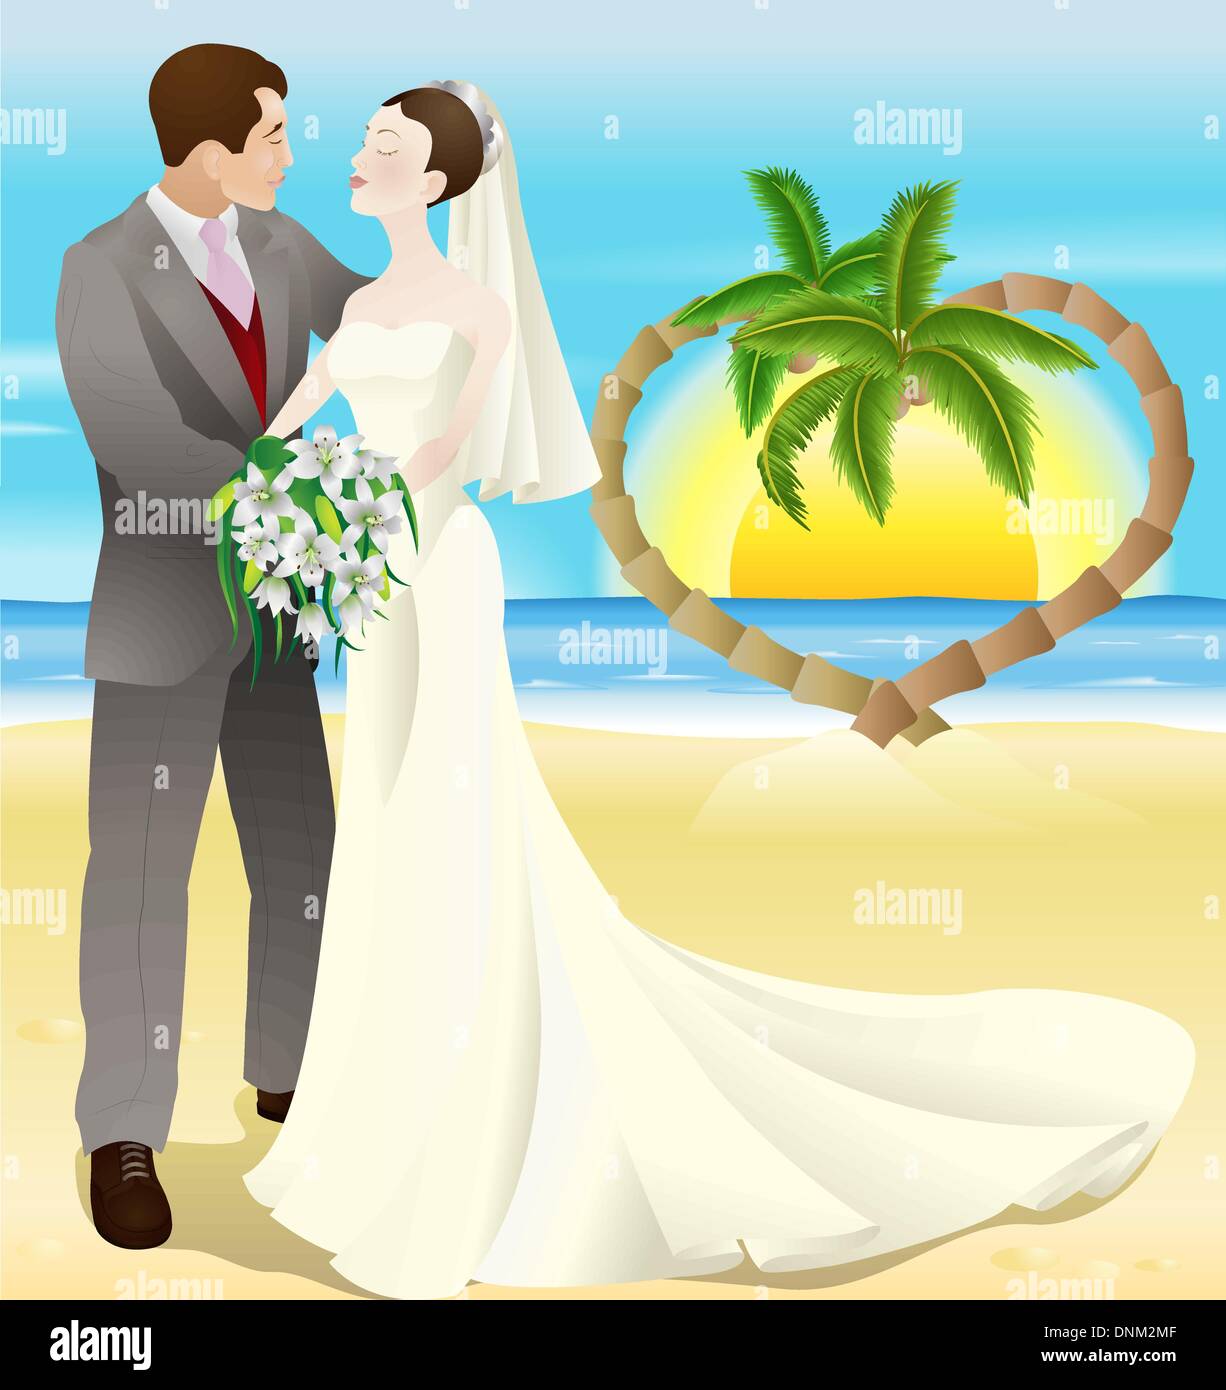 A tropical destination beach wedding illustration. A bride and groom newly wed on a tropical beach. Palm trees form a heart shap Stock Vector